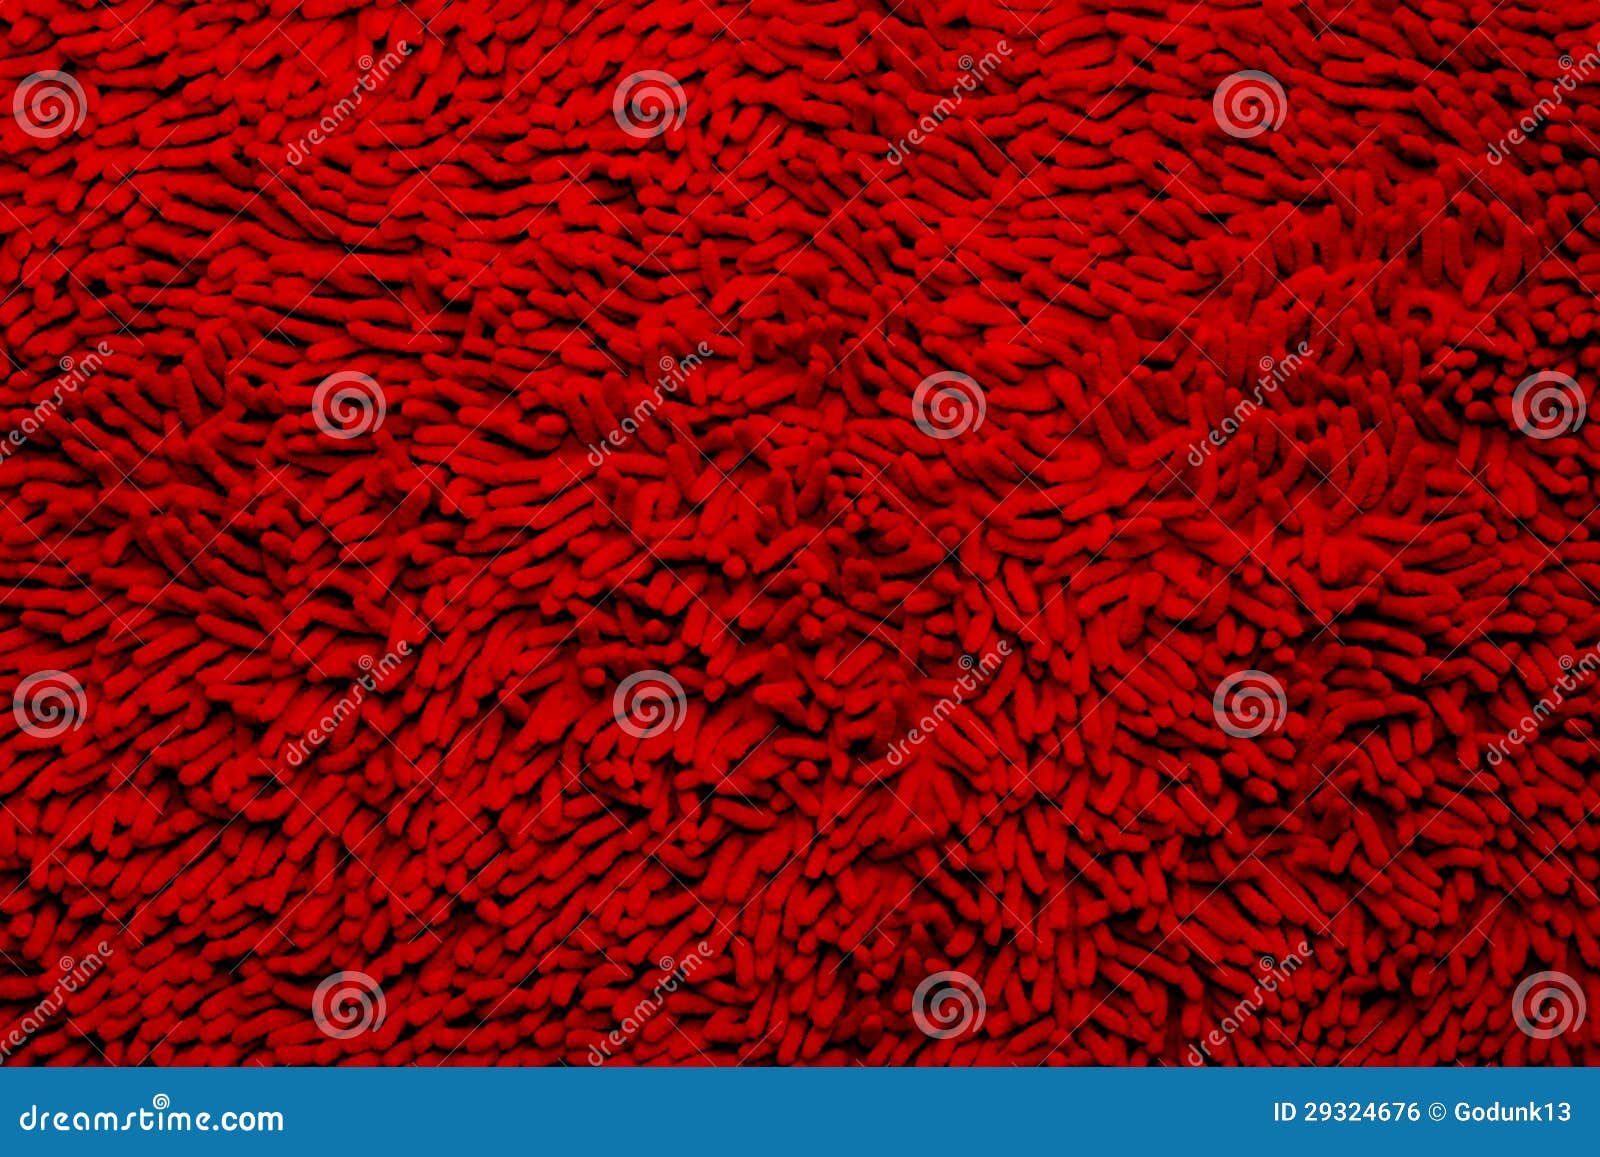 paus Krachtig atomair Rode badmat Microfiber stock foto. Image of microvezel - 29324676